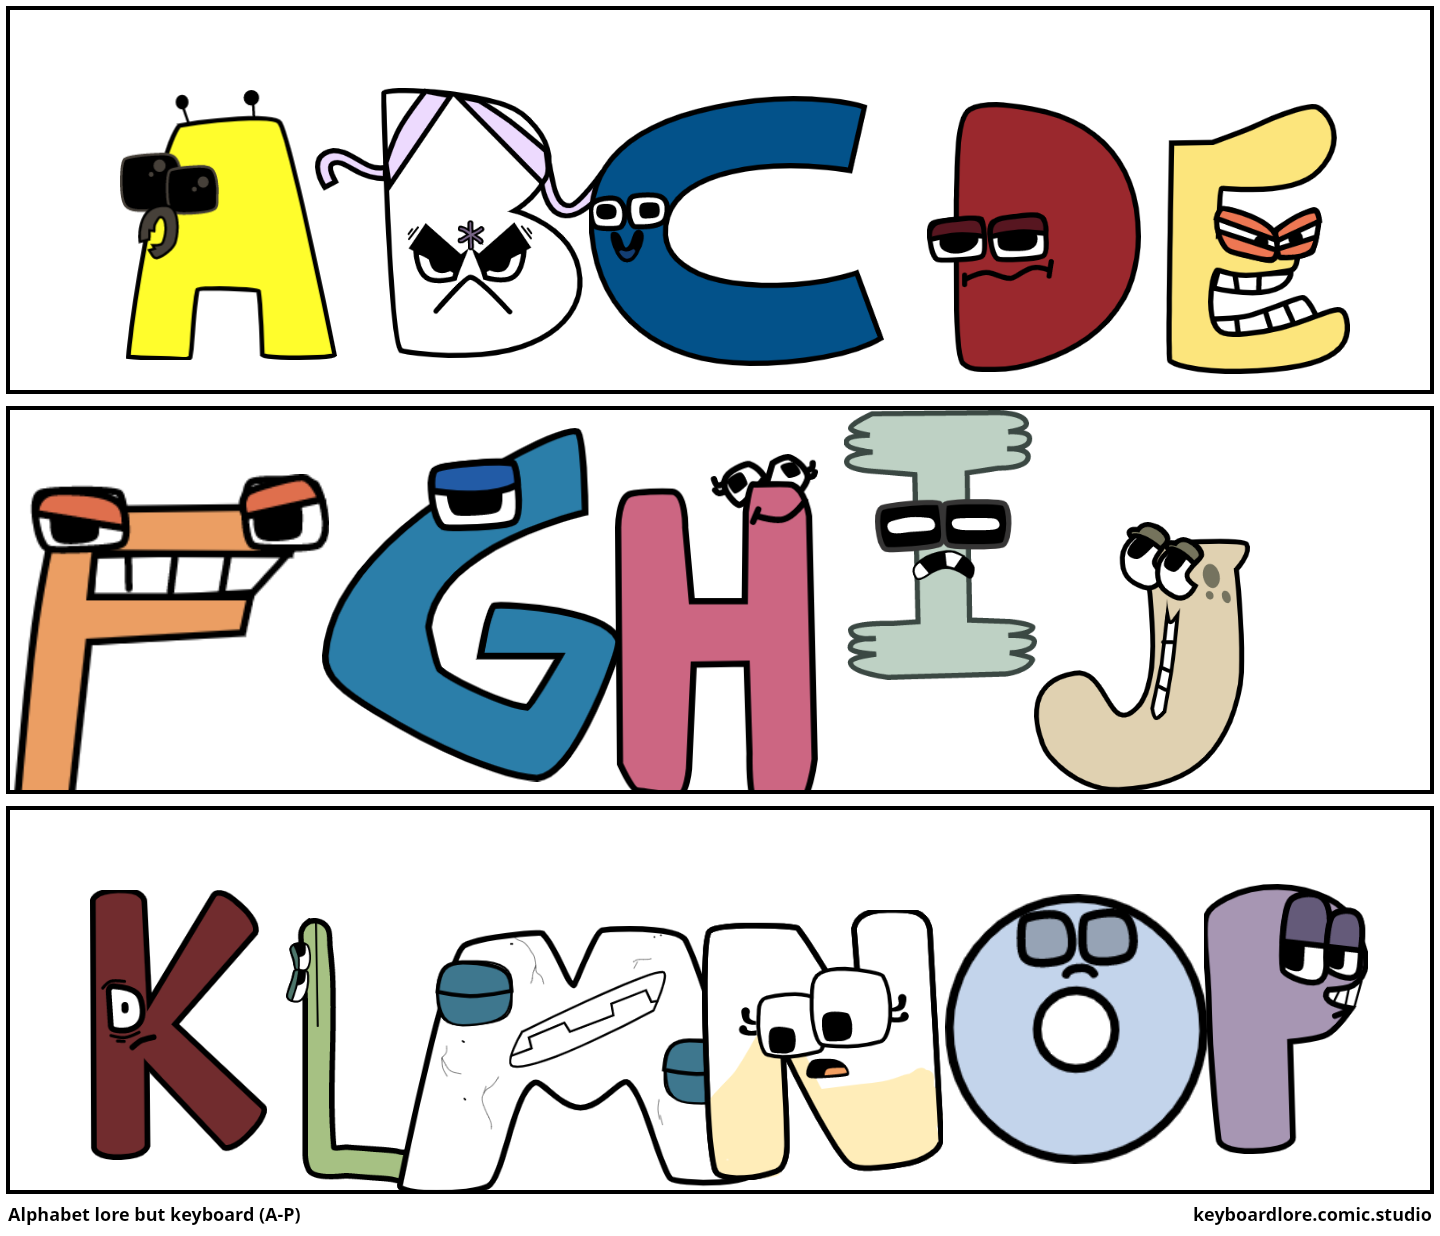 Alphabet lore but keyboard (A-P) - Comic Studio